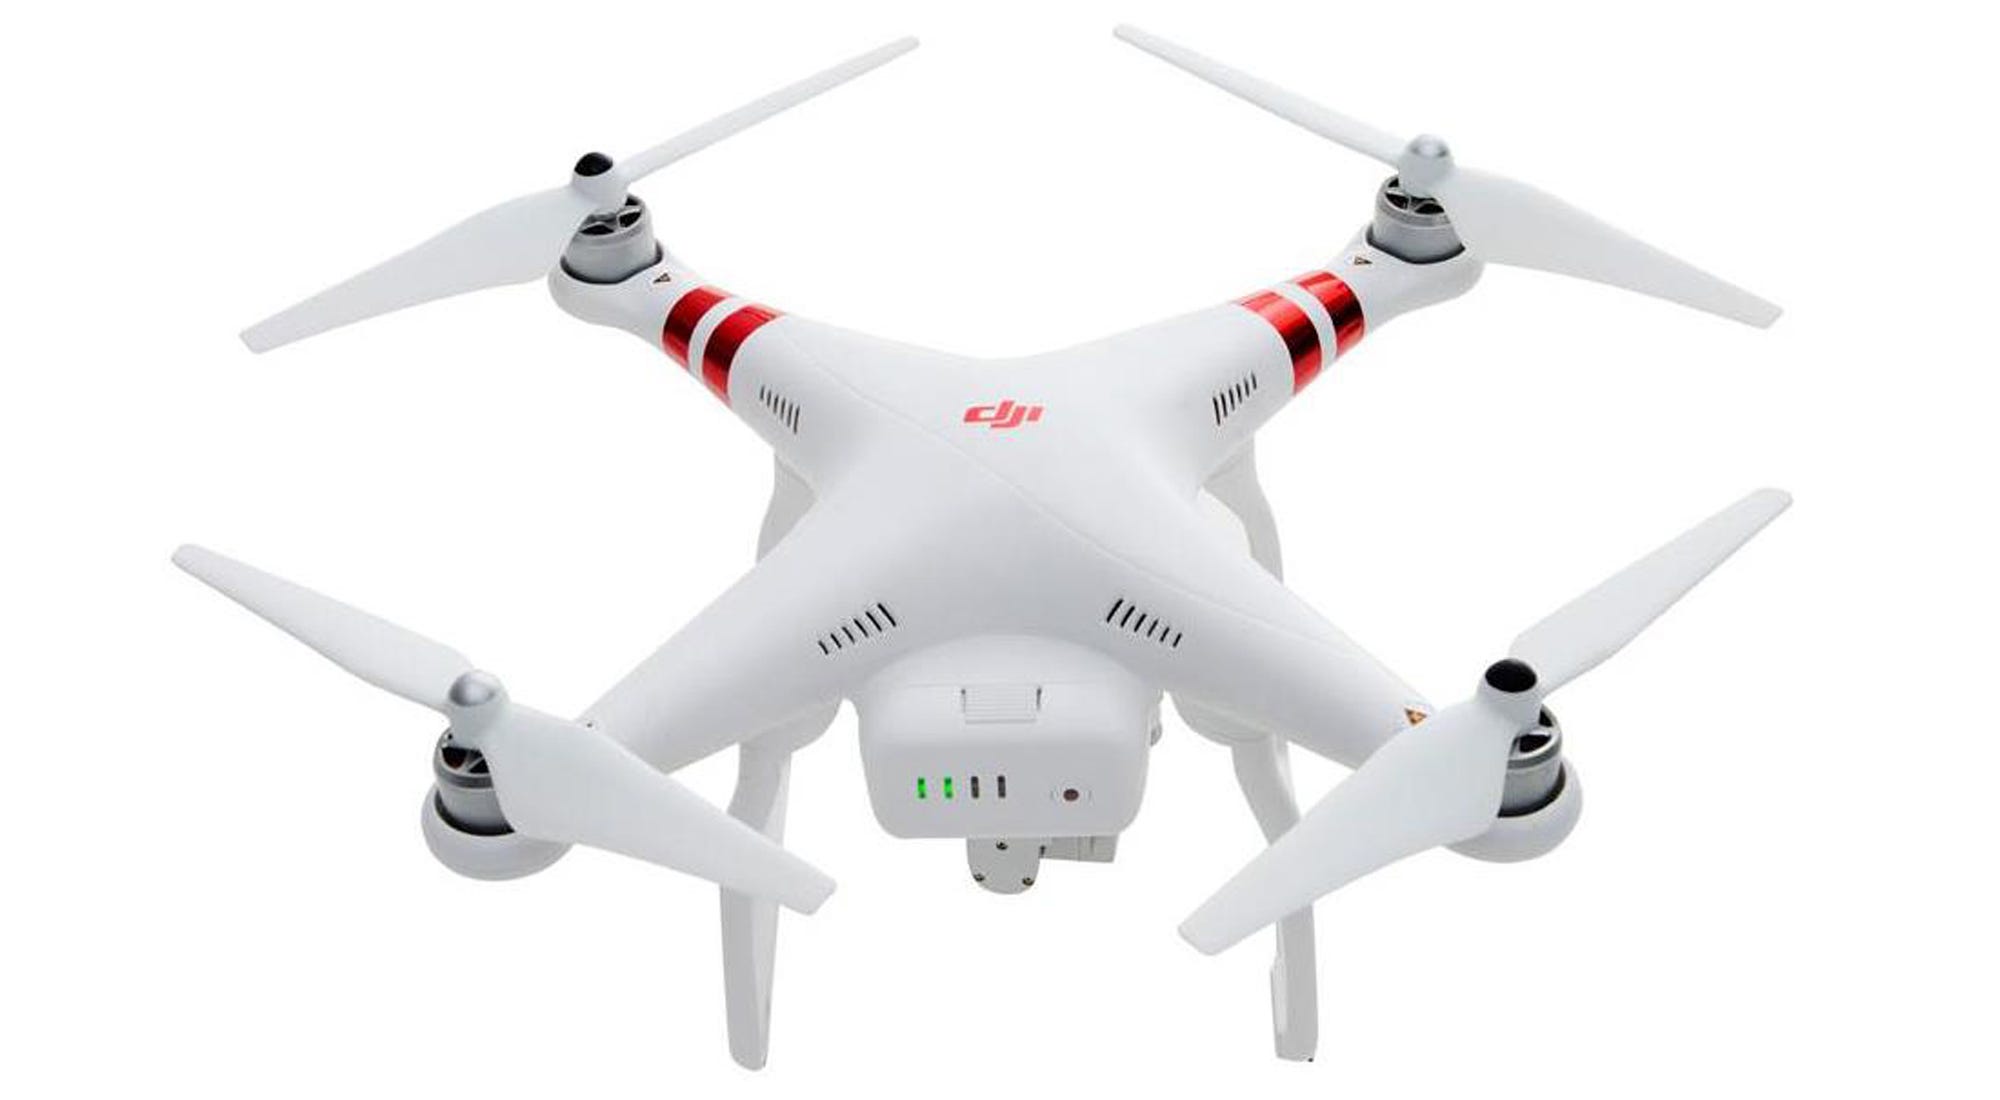 First Look: DJI Phantom 3 Standard, Easy-To-Use Camera Drone